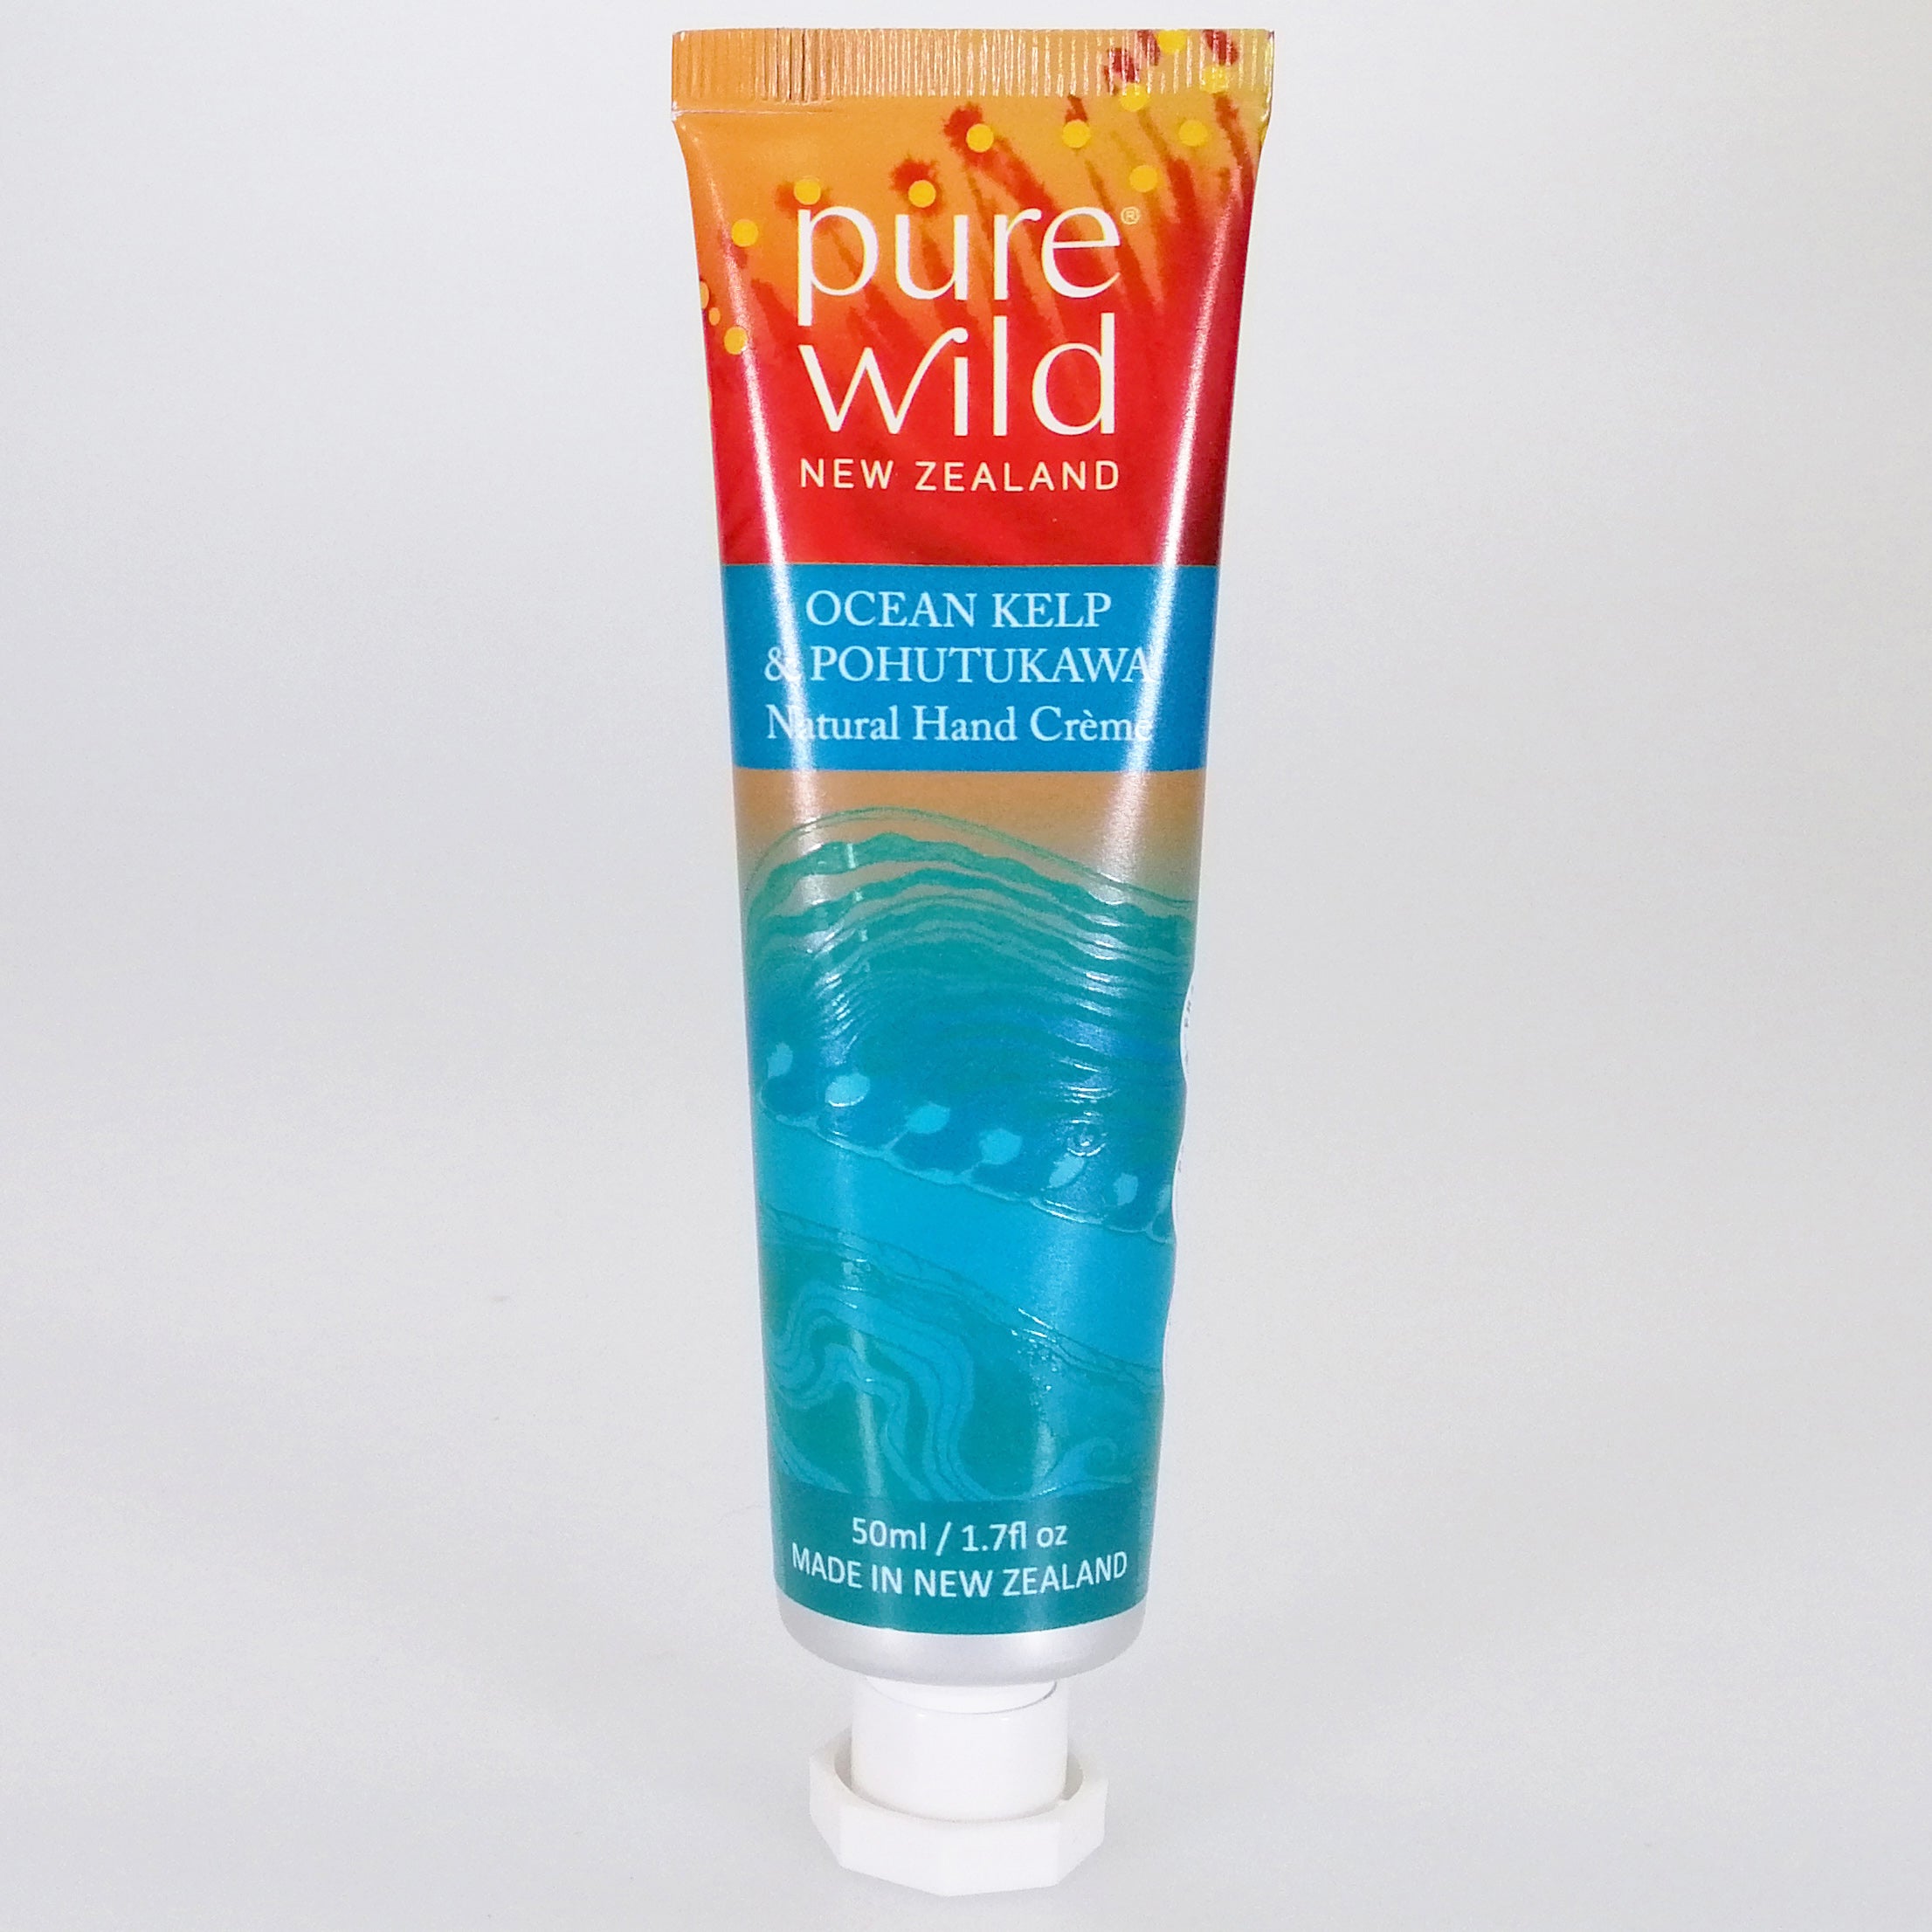 Pure Wild Natural Hand Creme - Ocean Kelp & Pohutukawa